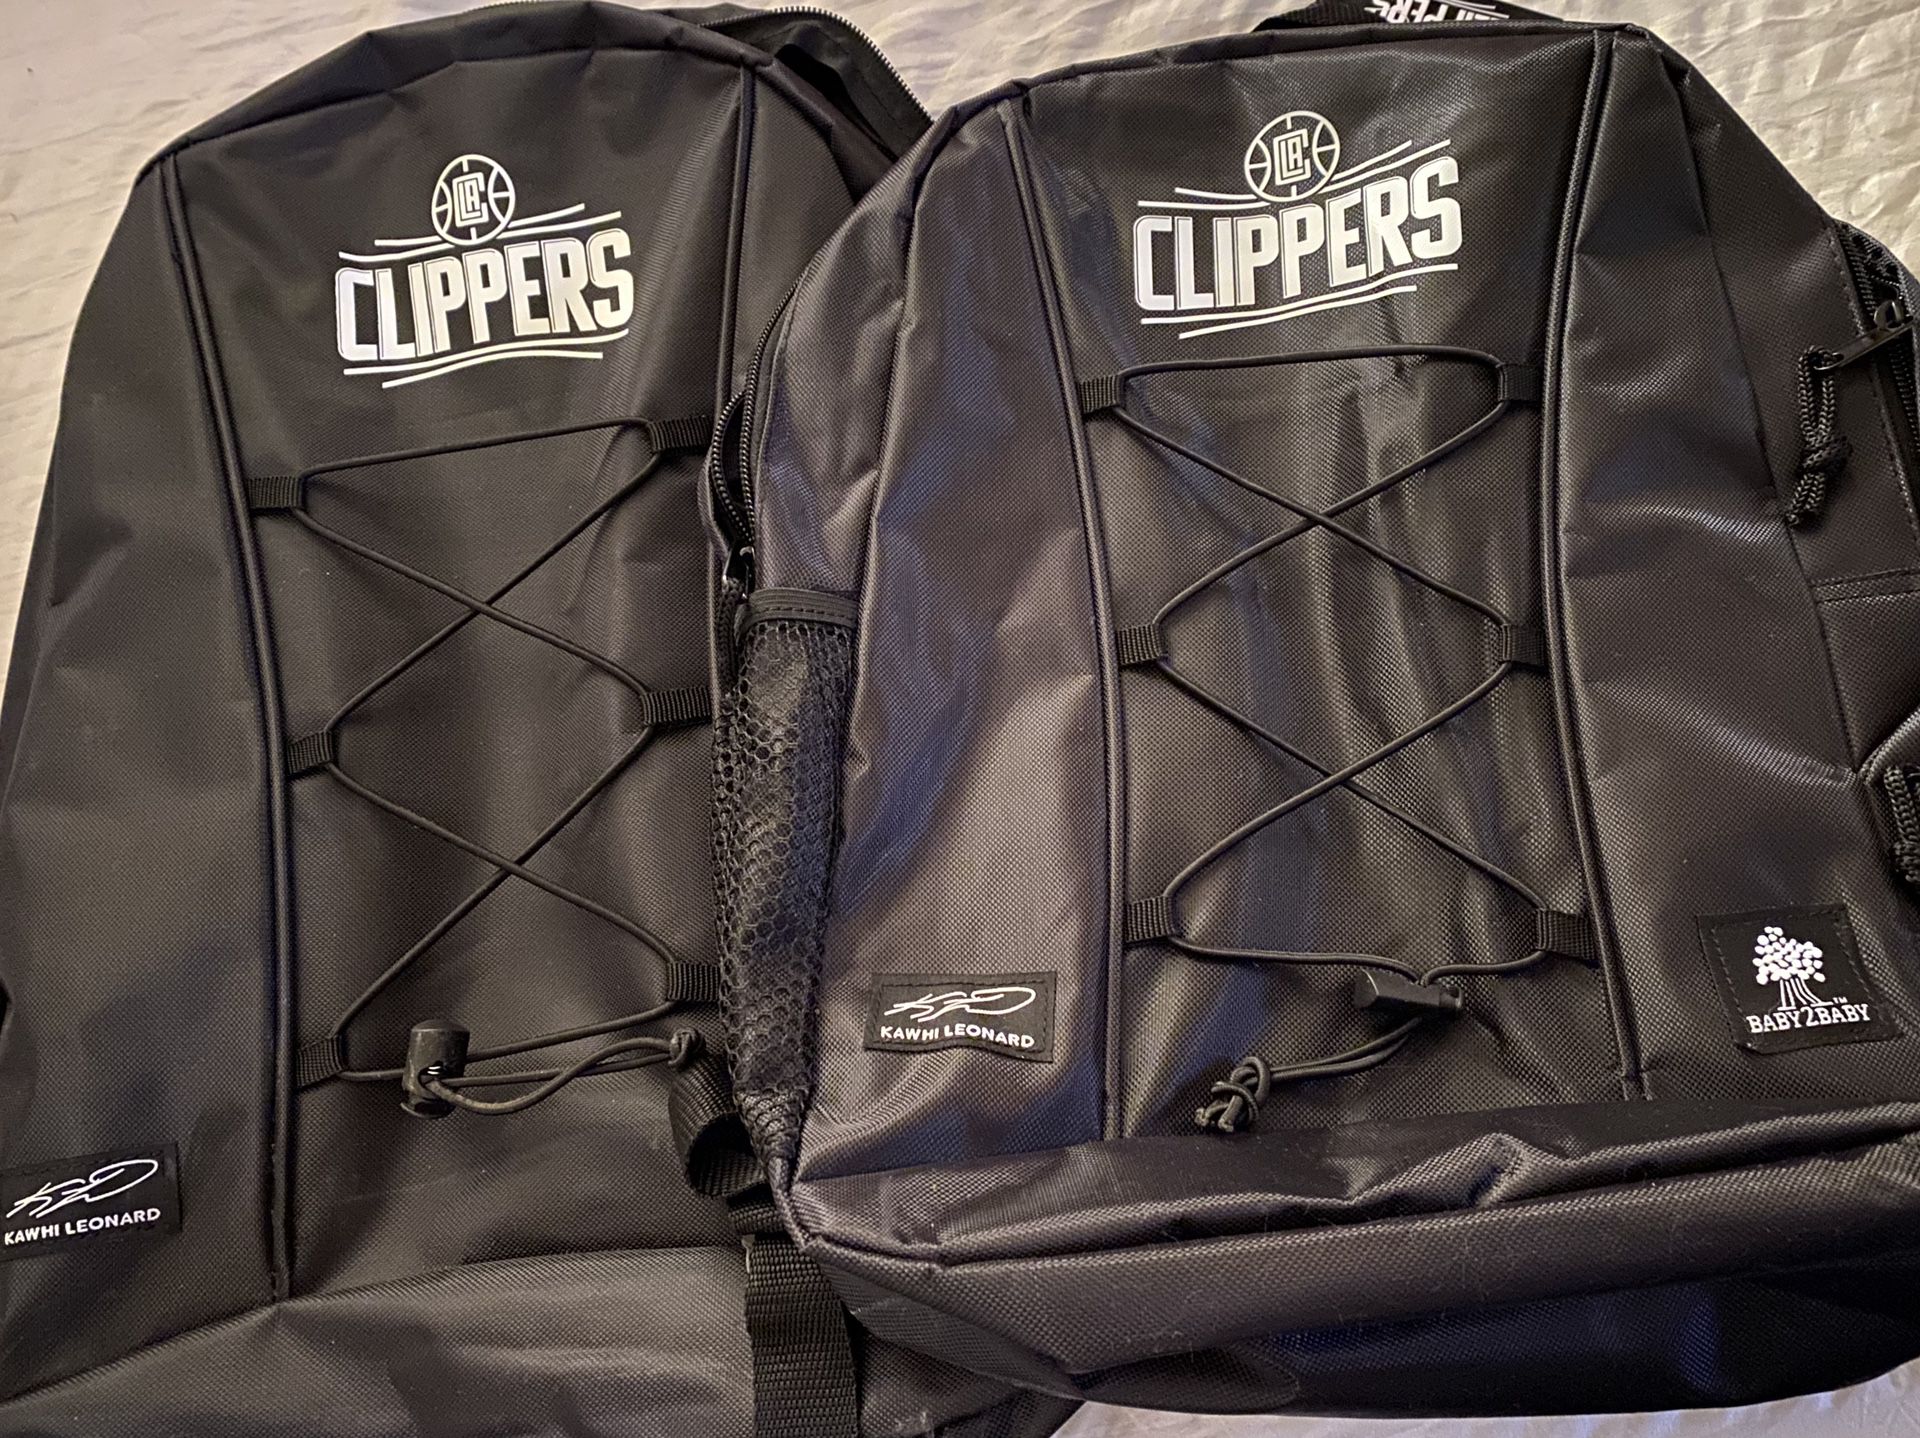 Clipper backpacks